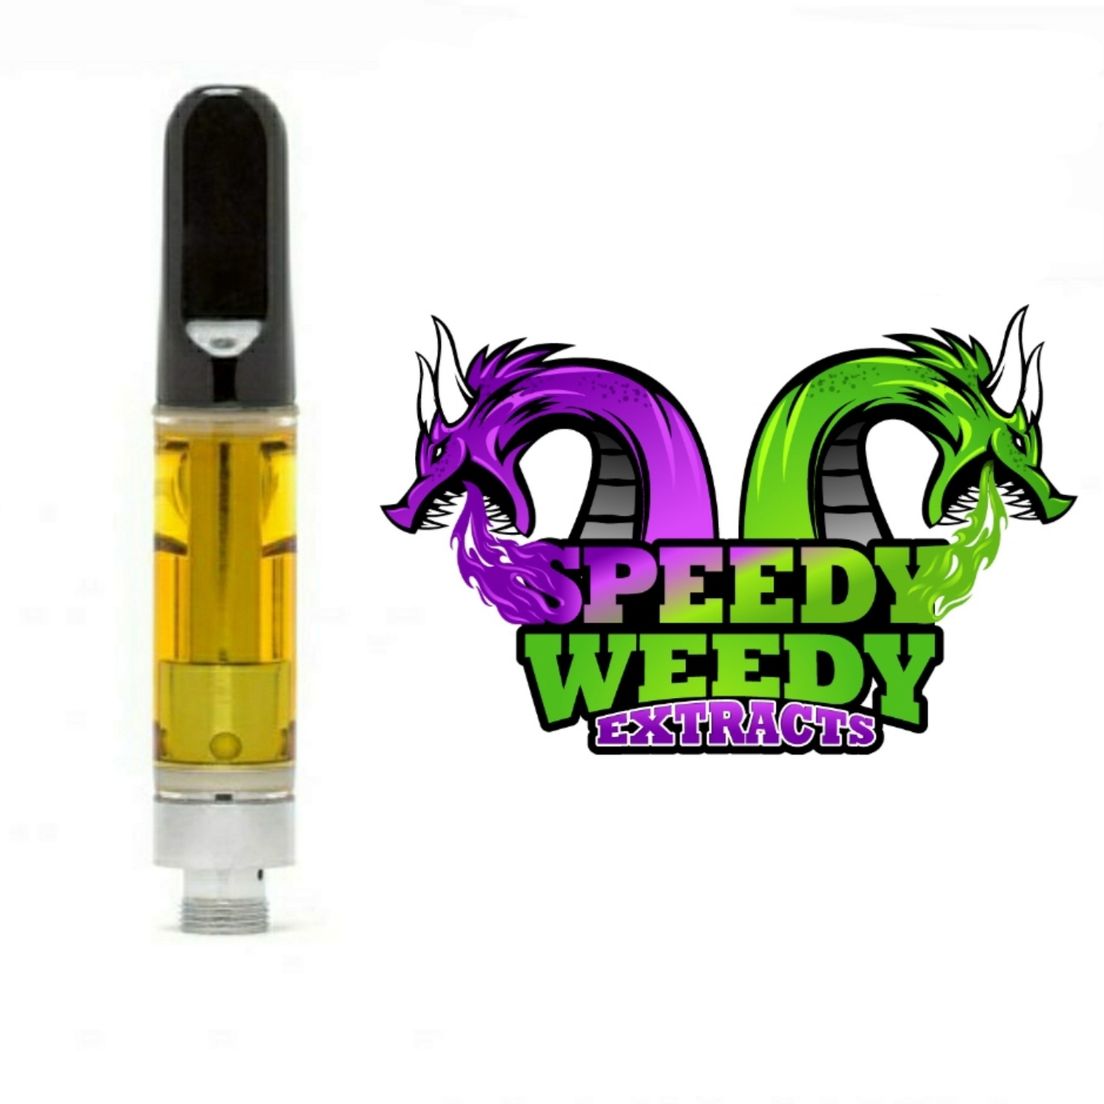 1. Speedy Weedy 1g THC Vape Cartridge - GSC (H) 3/$60